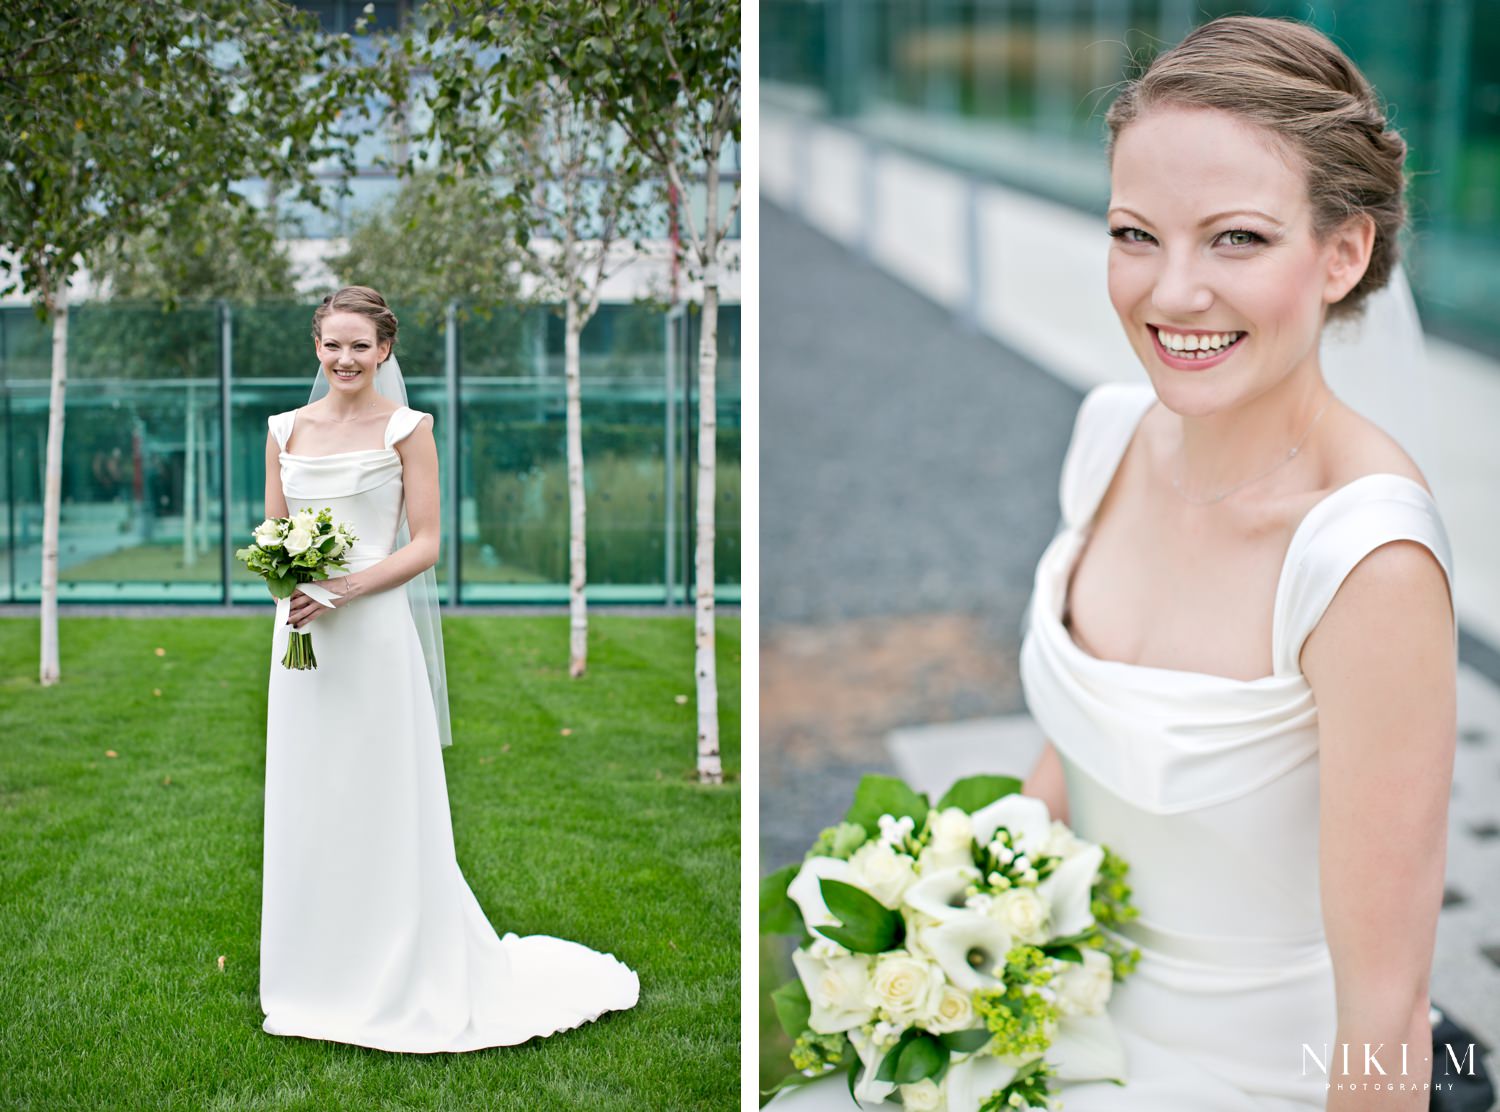 Bridal prep at Highbury Stadium Square for a Tower of London Wedding